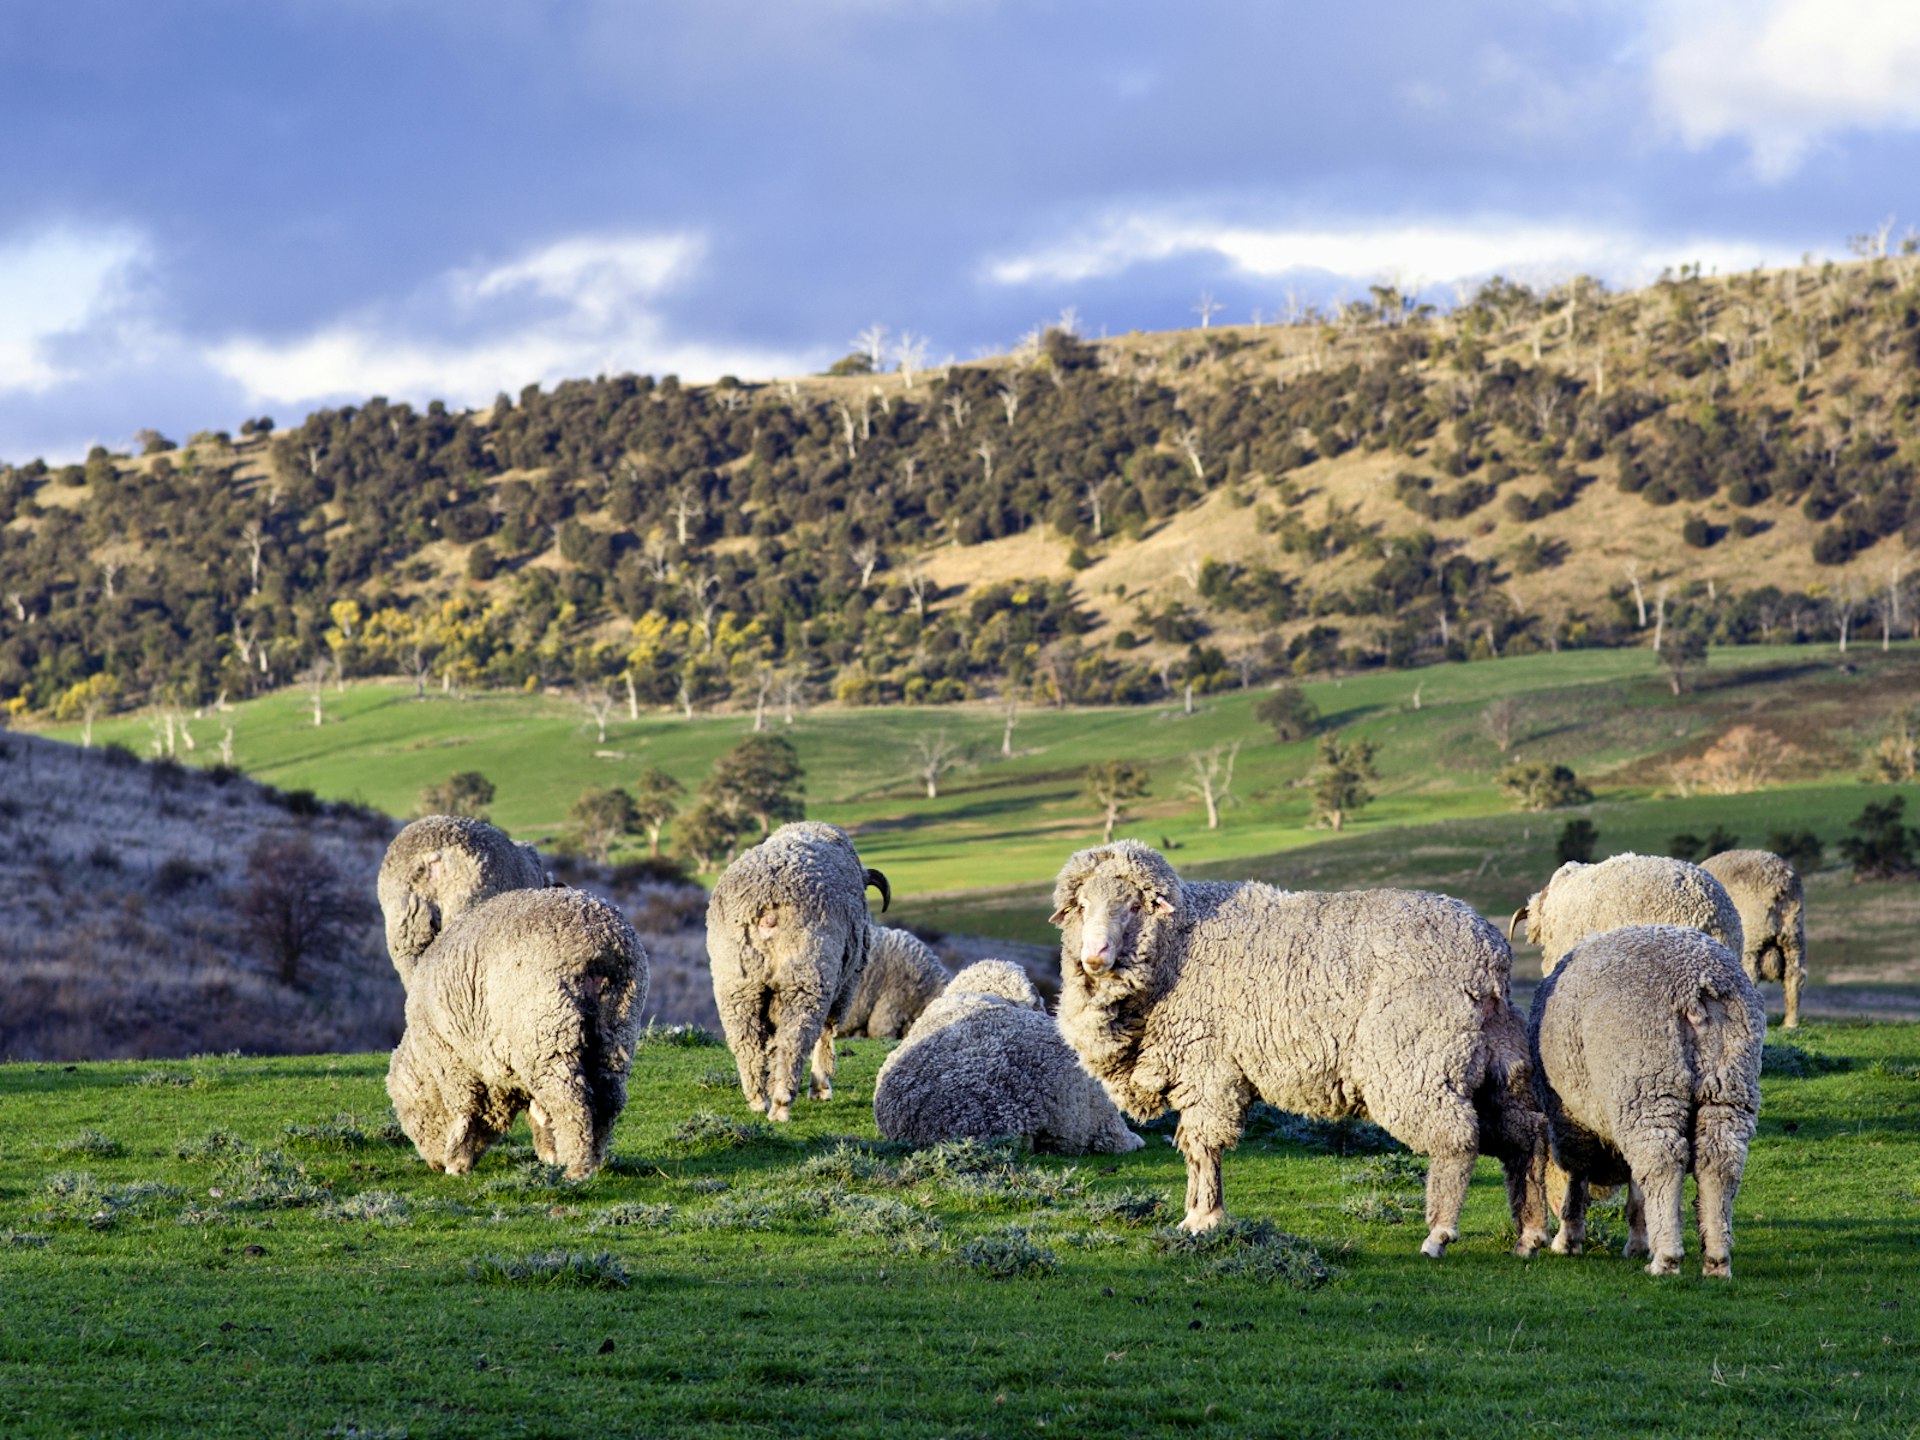 Sheep grazing on Tasmania's lush green landscapes